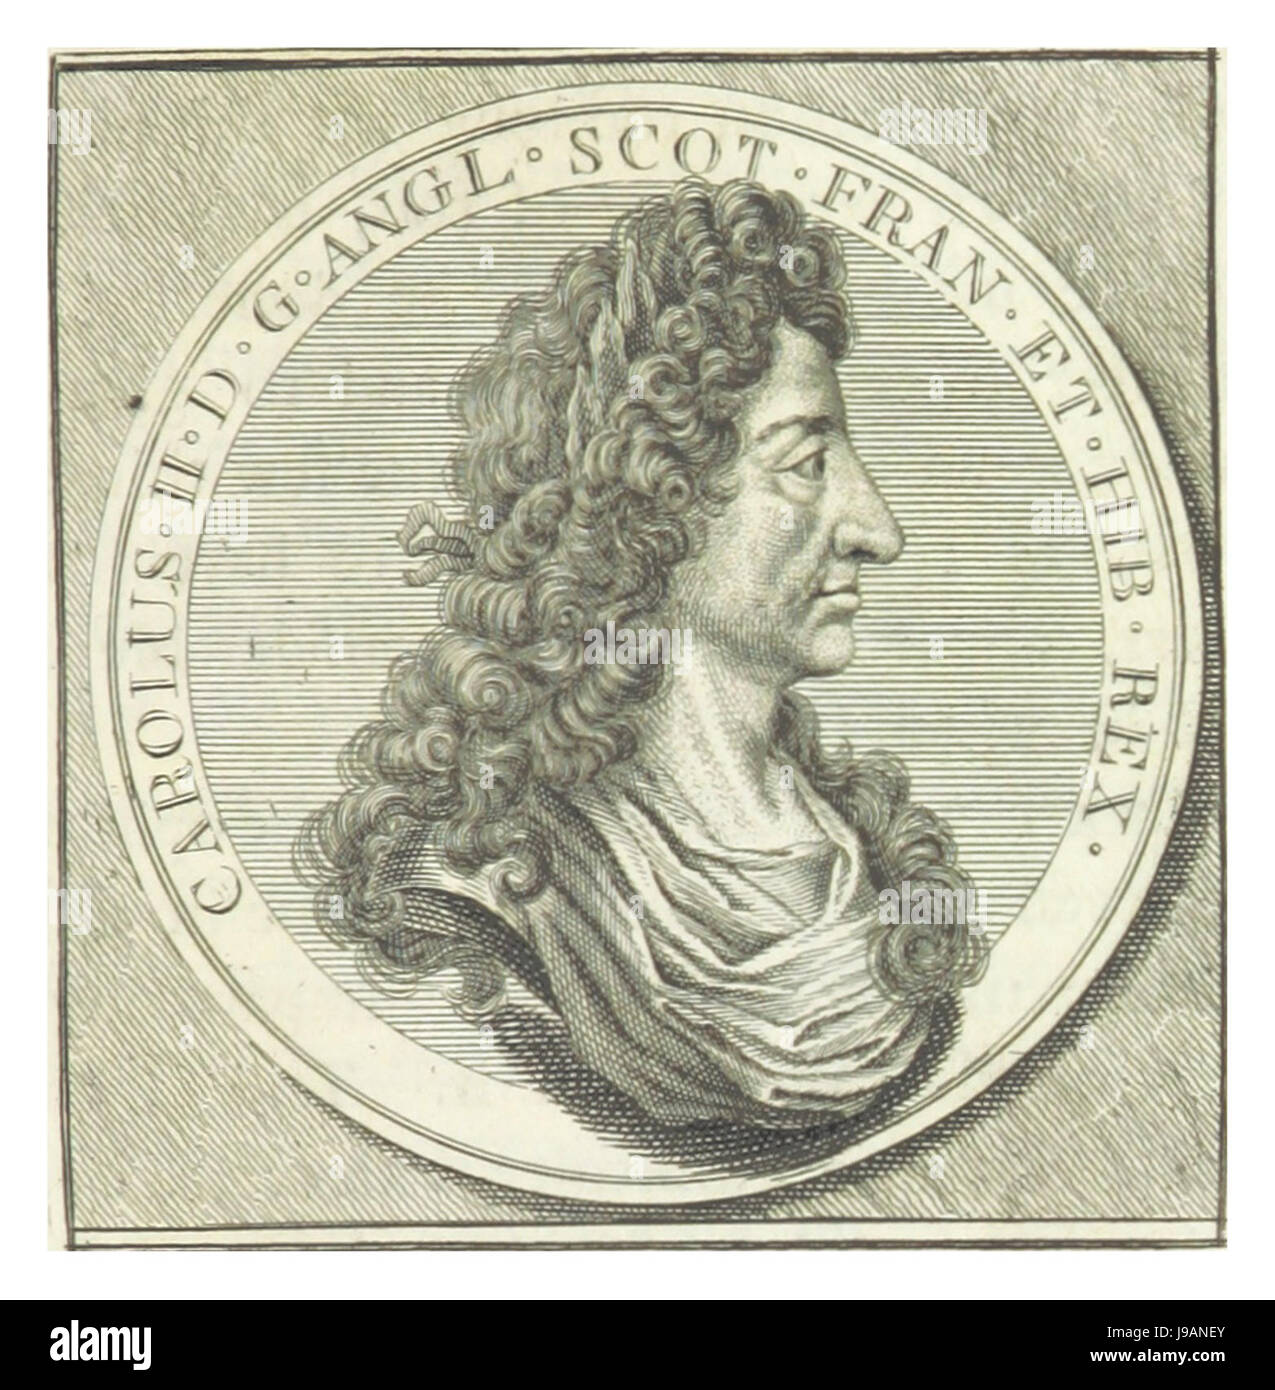 Sheffield(1740) p2.037 König Charles II. Stockfoto